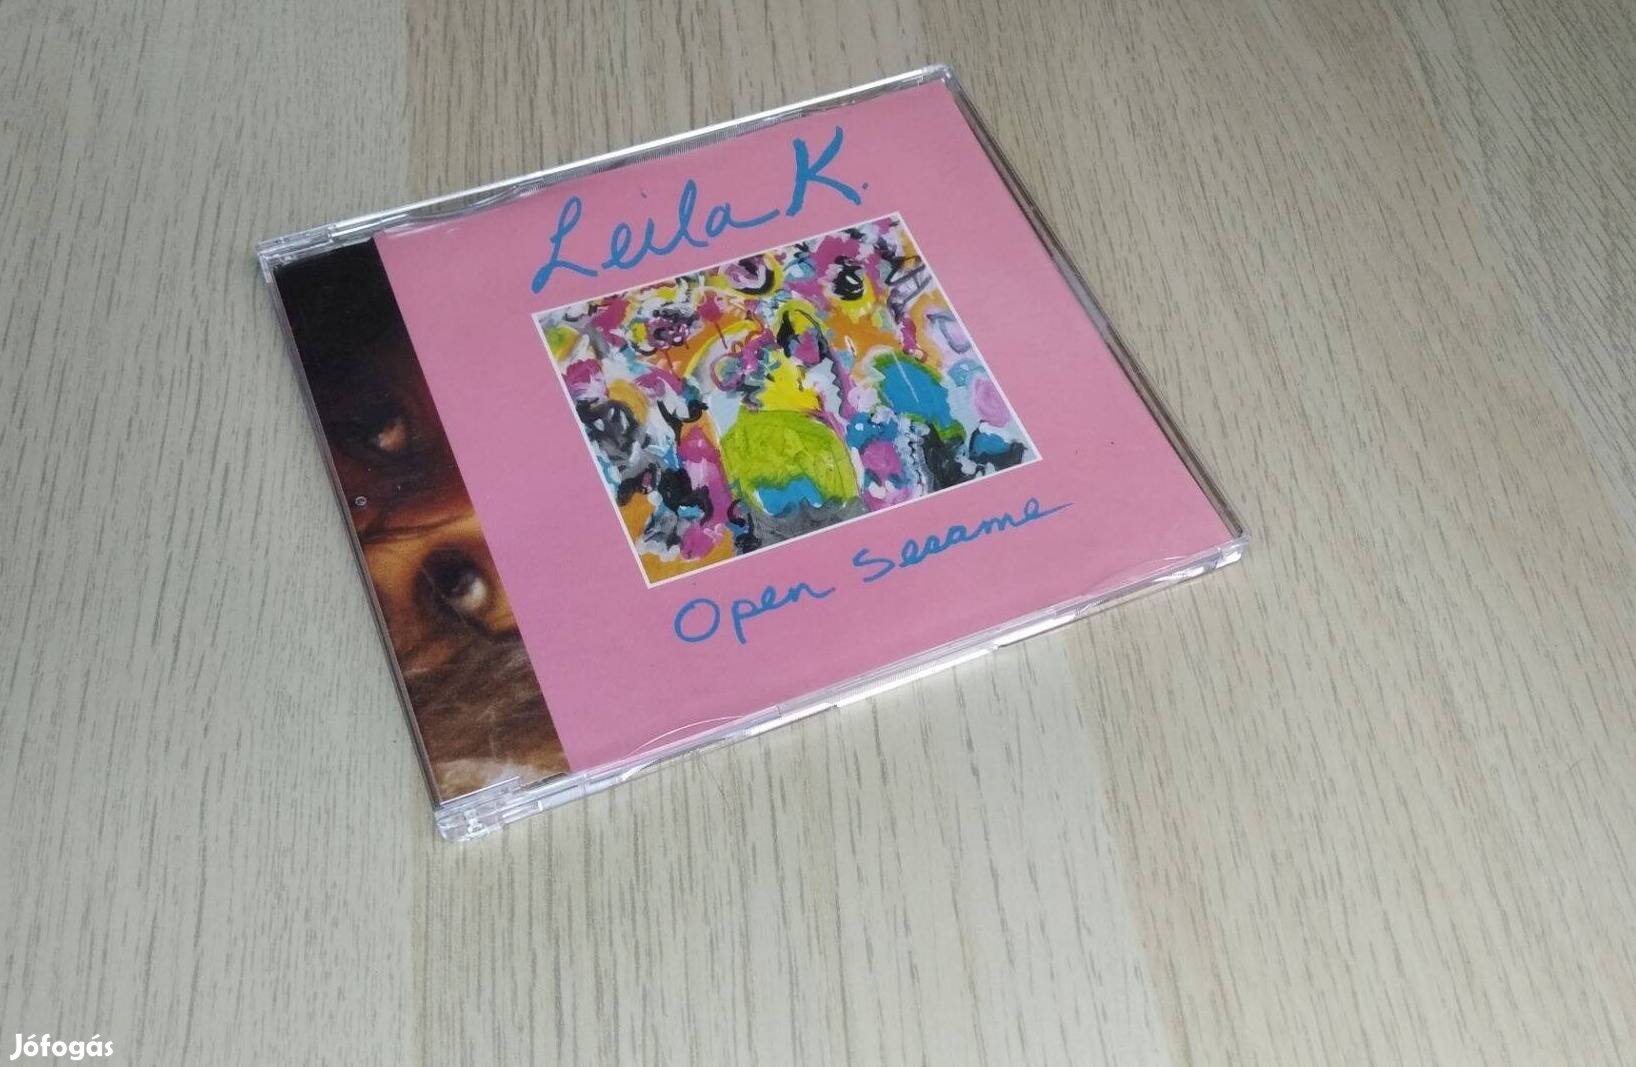 Leila K. - Open Sesame / Maxi CD 1992